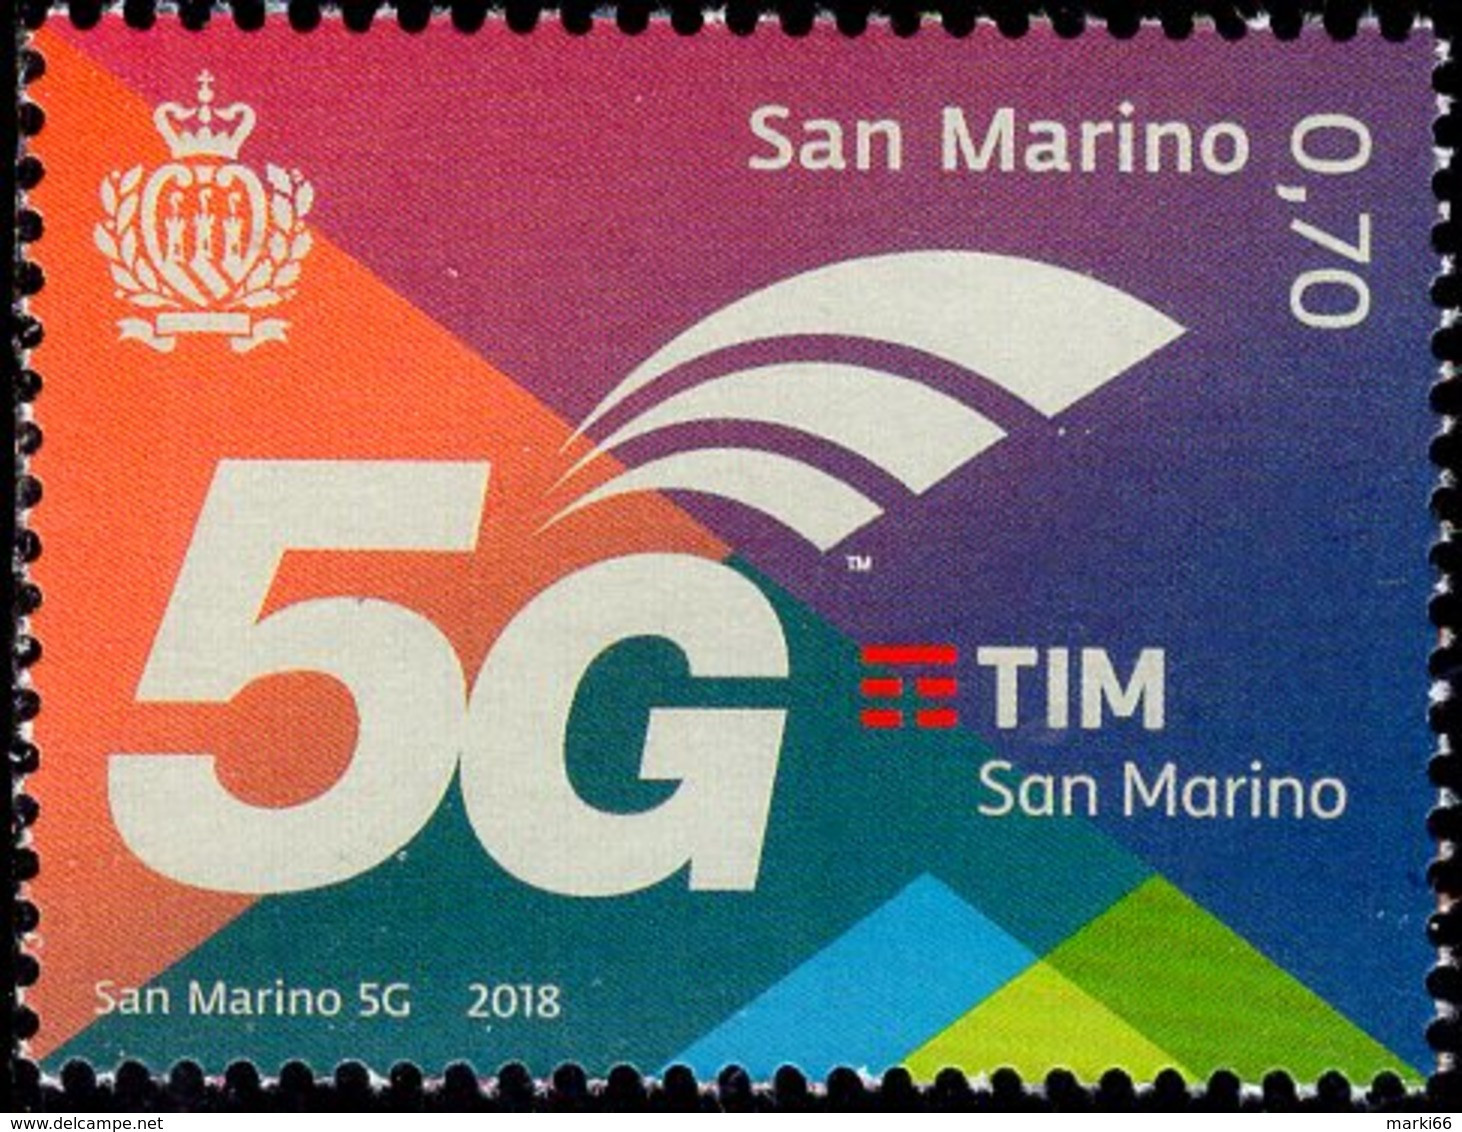 San Marino - 2018 - 5G Communication In San Marino - Mint Stamp - Unused Stamps